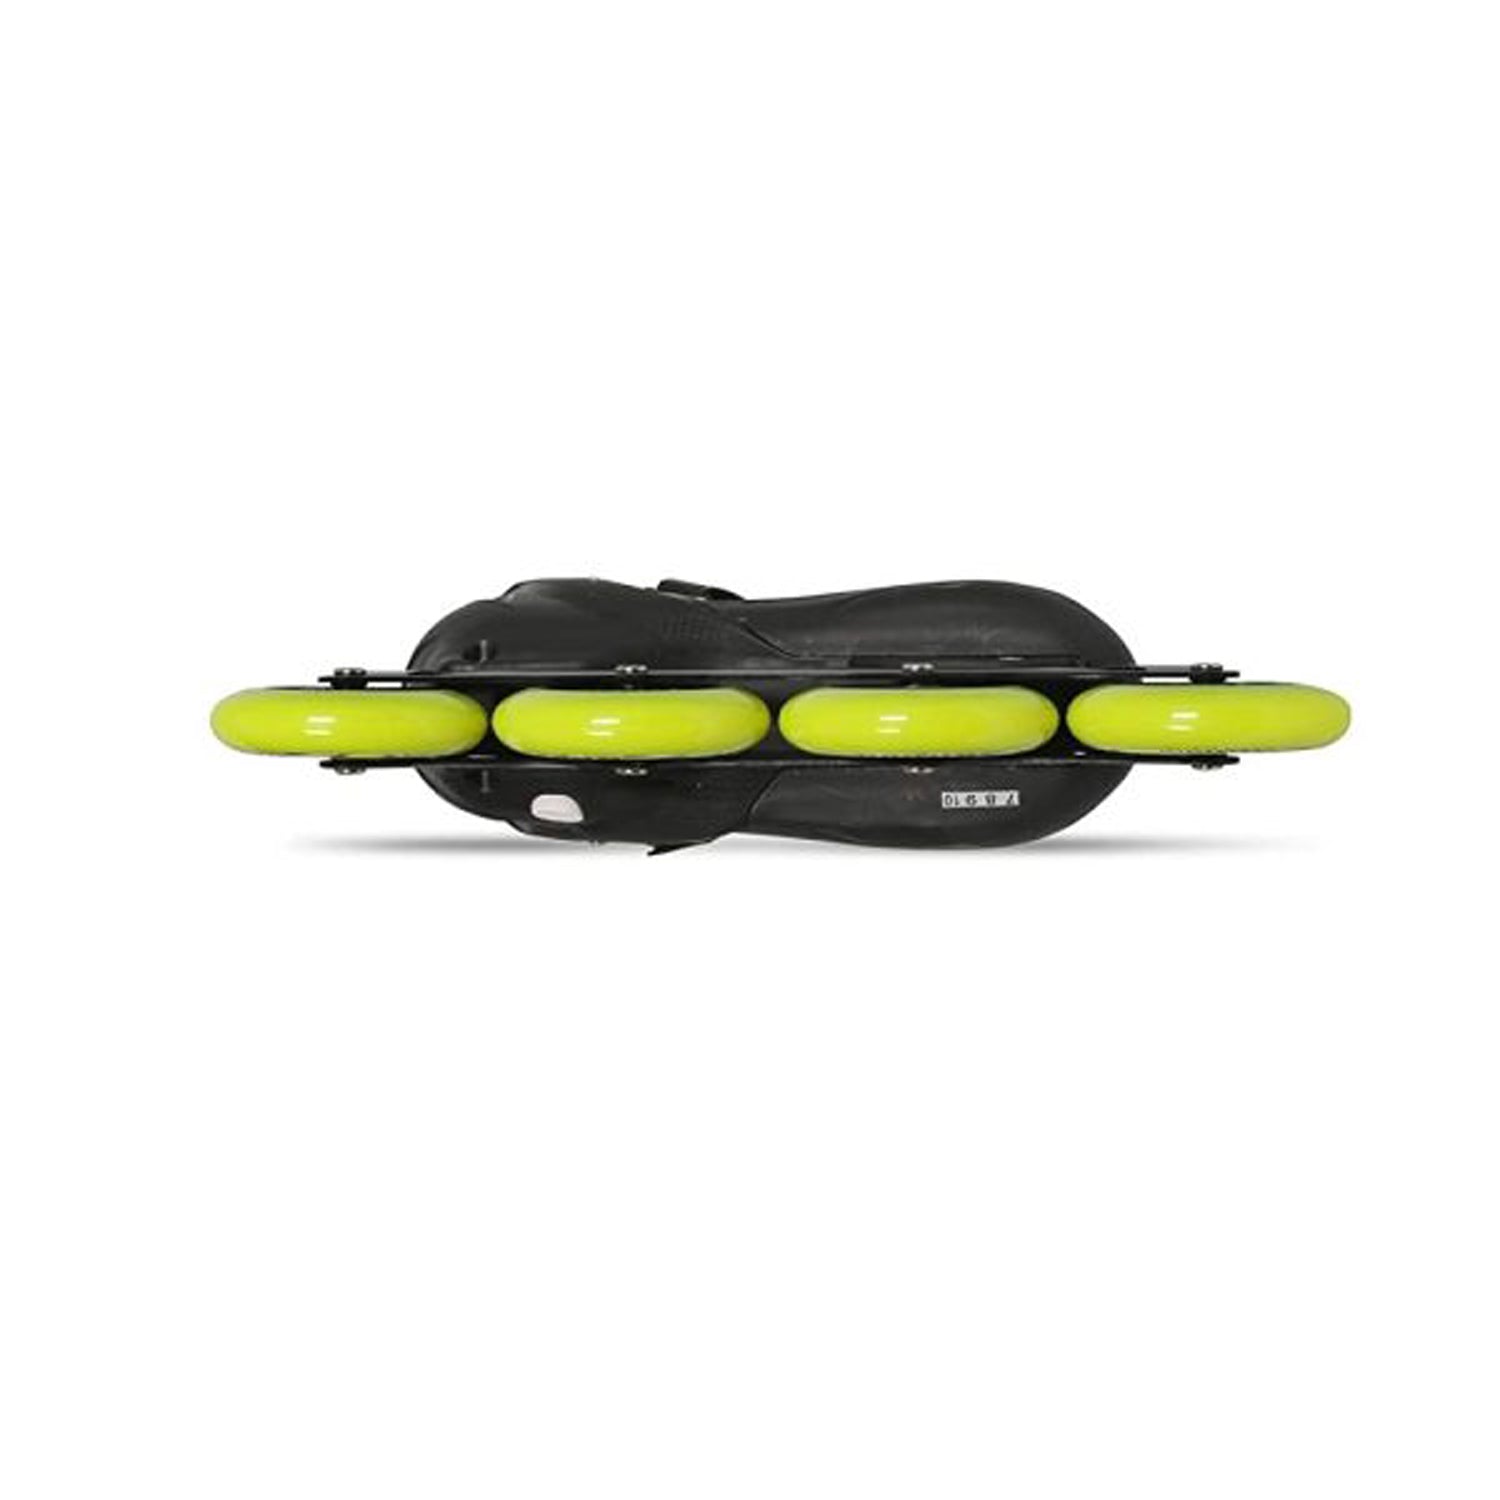 Viva LF-0935XL Inline Skates, 100mm - Black/Yellow - Best Price online Prokicksports.com